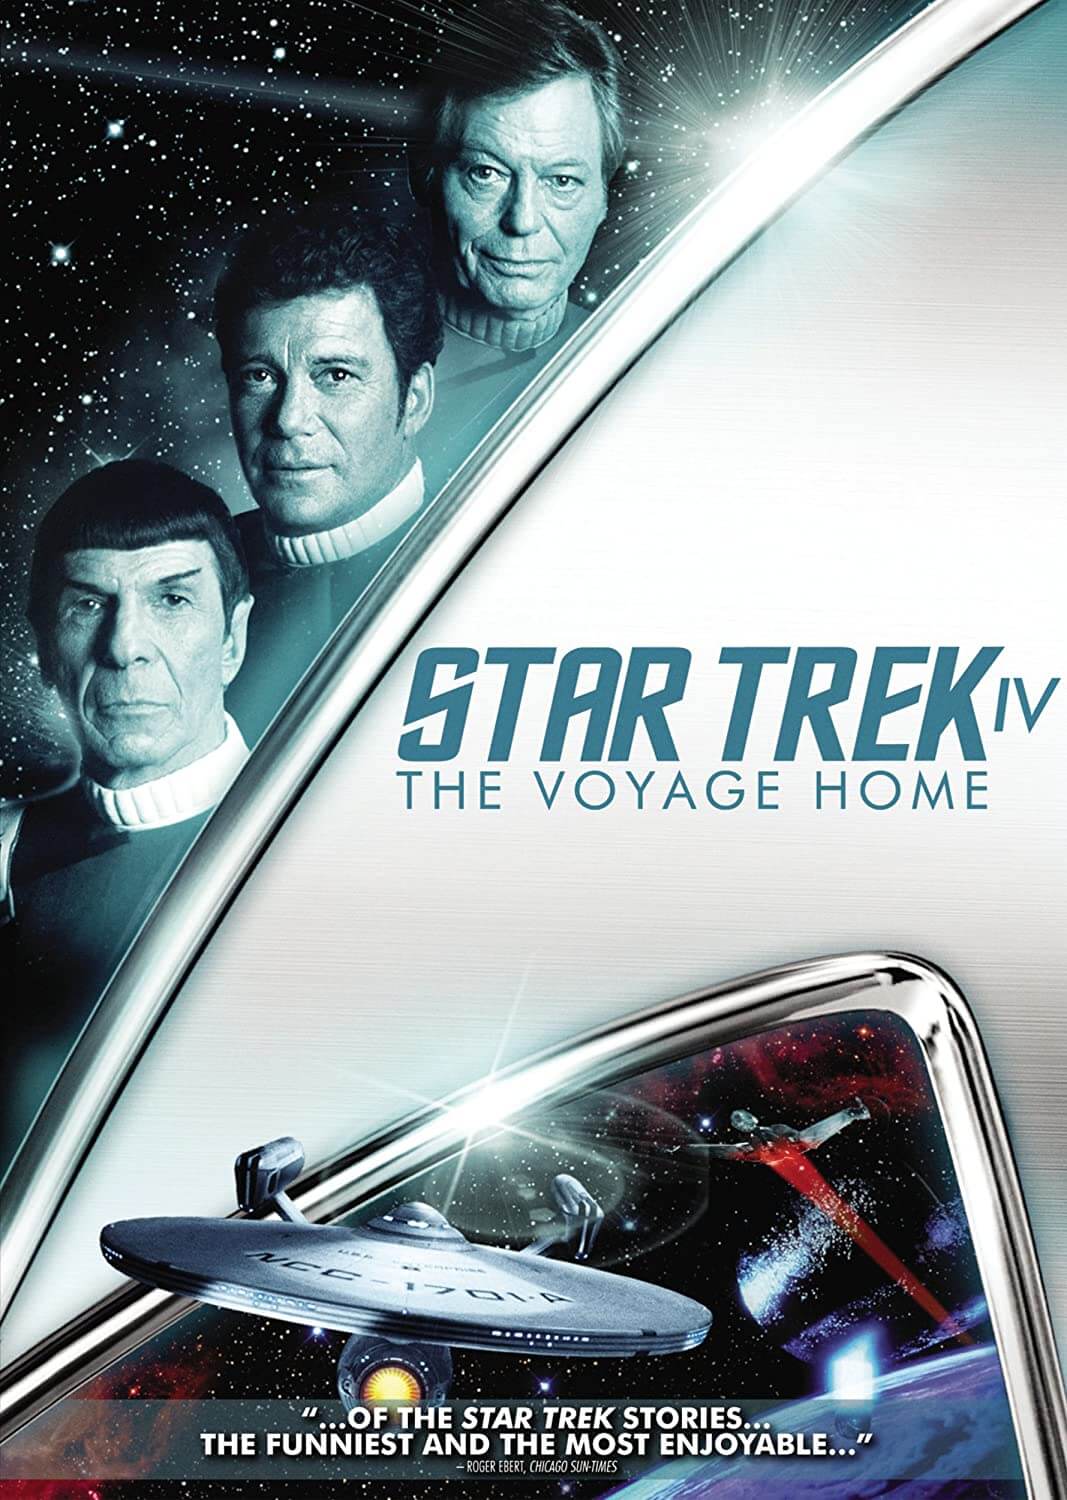 "Star Trek IV: The Voyage Home" DVD